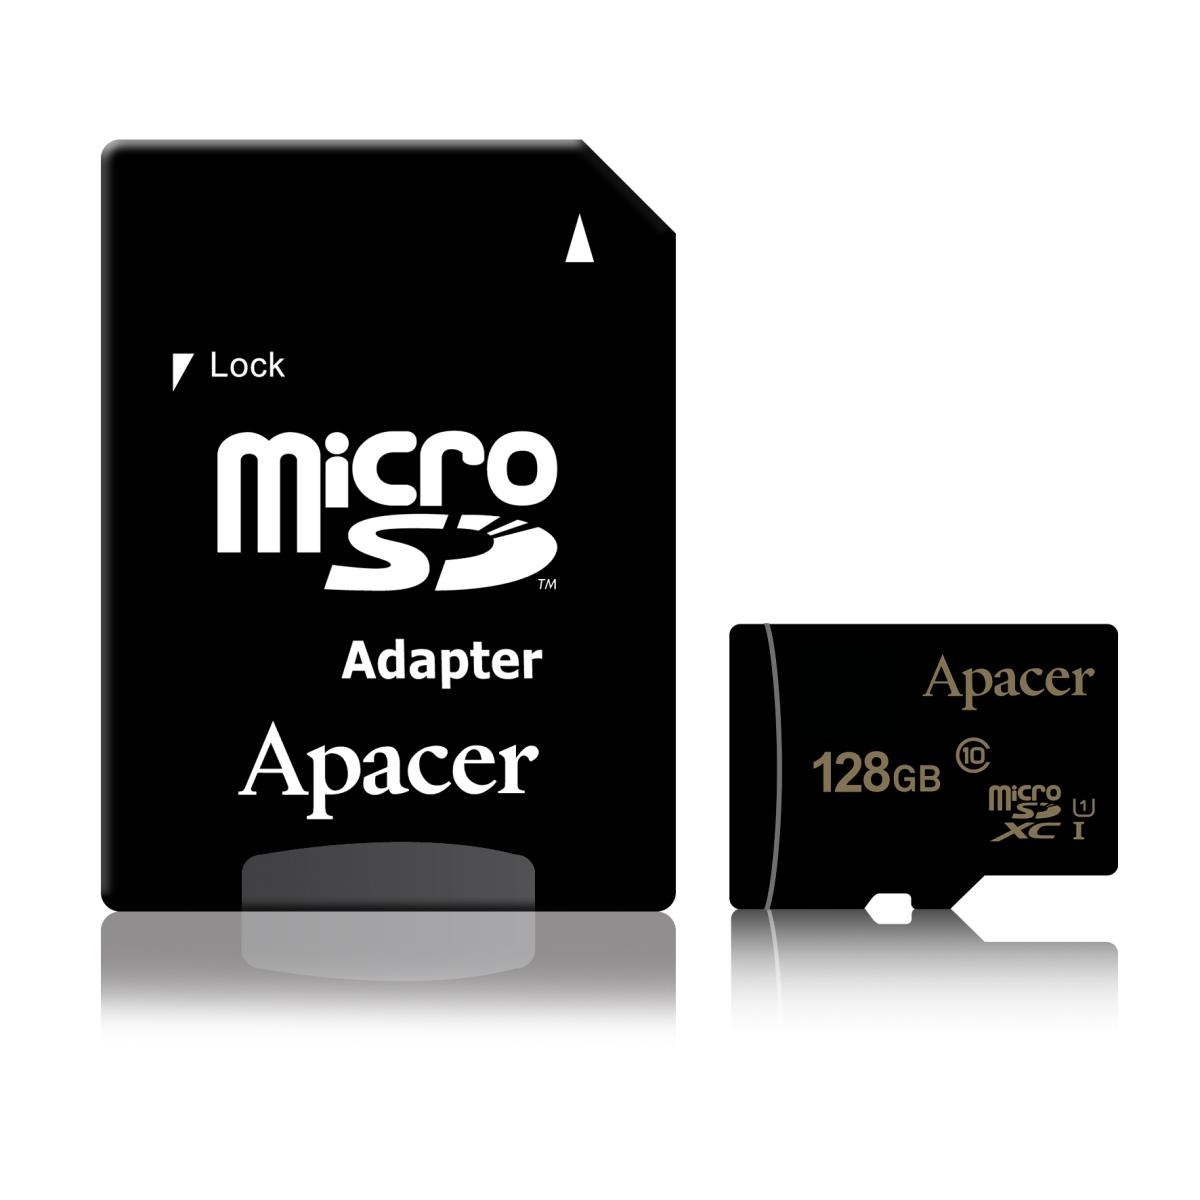 Apacer microSDXC/SDHC UHS-I U1 Class 10 128GB